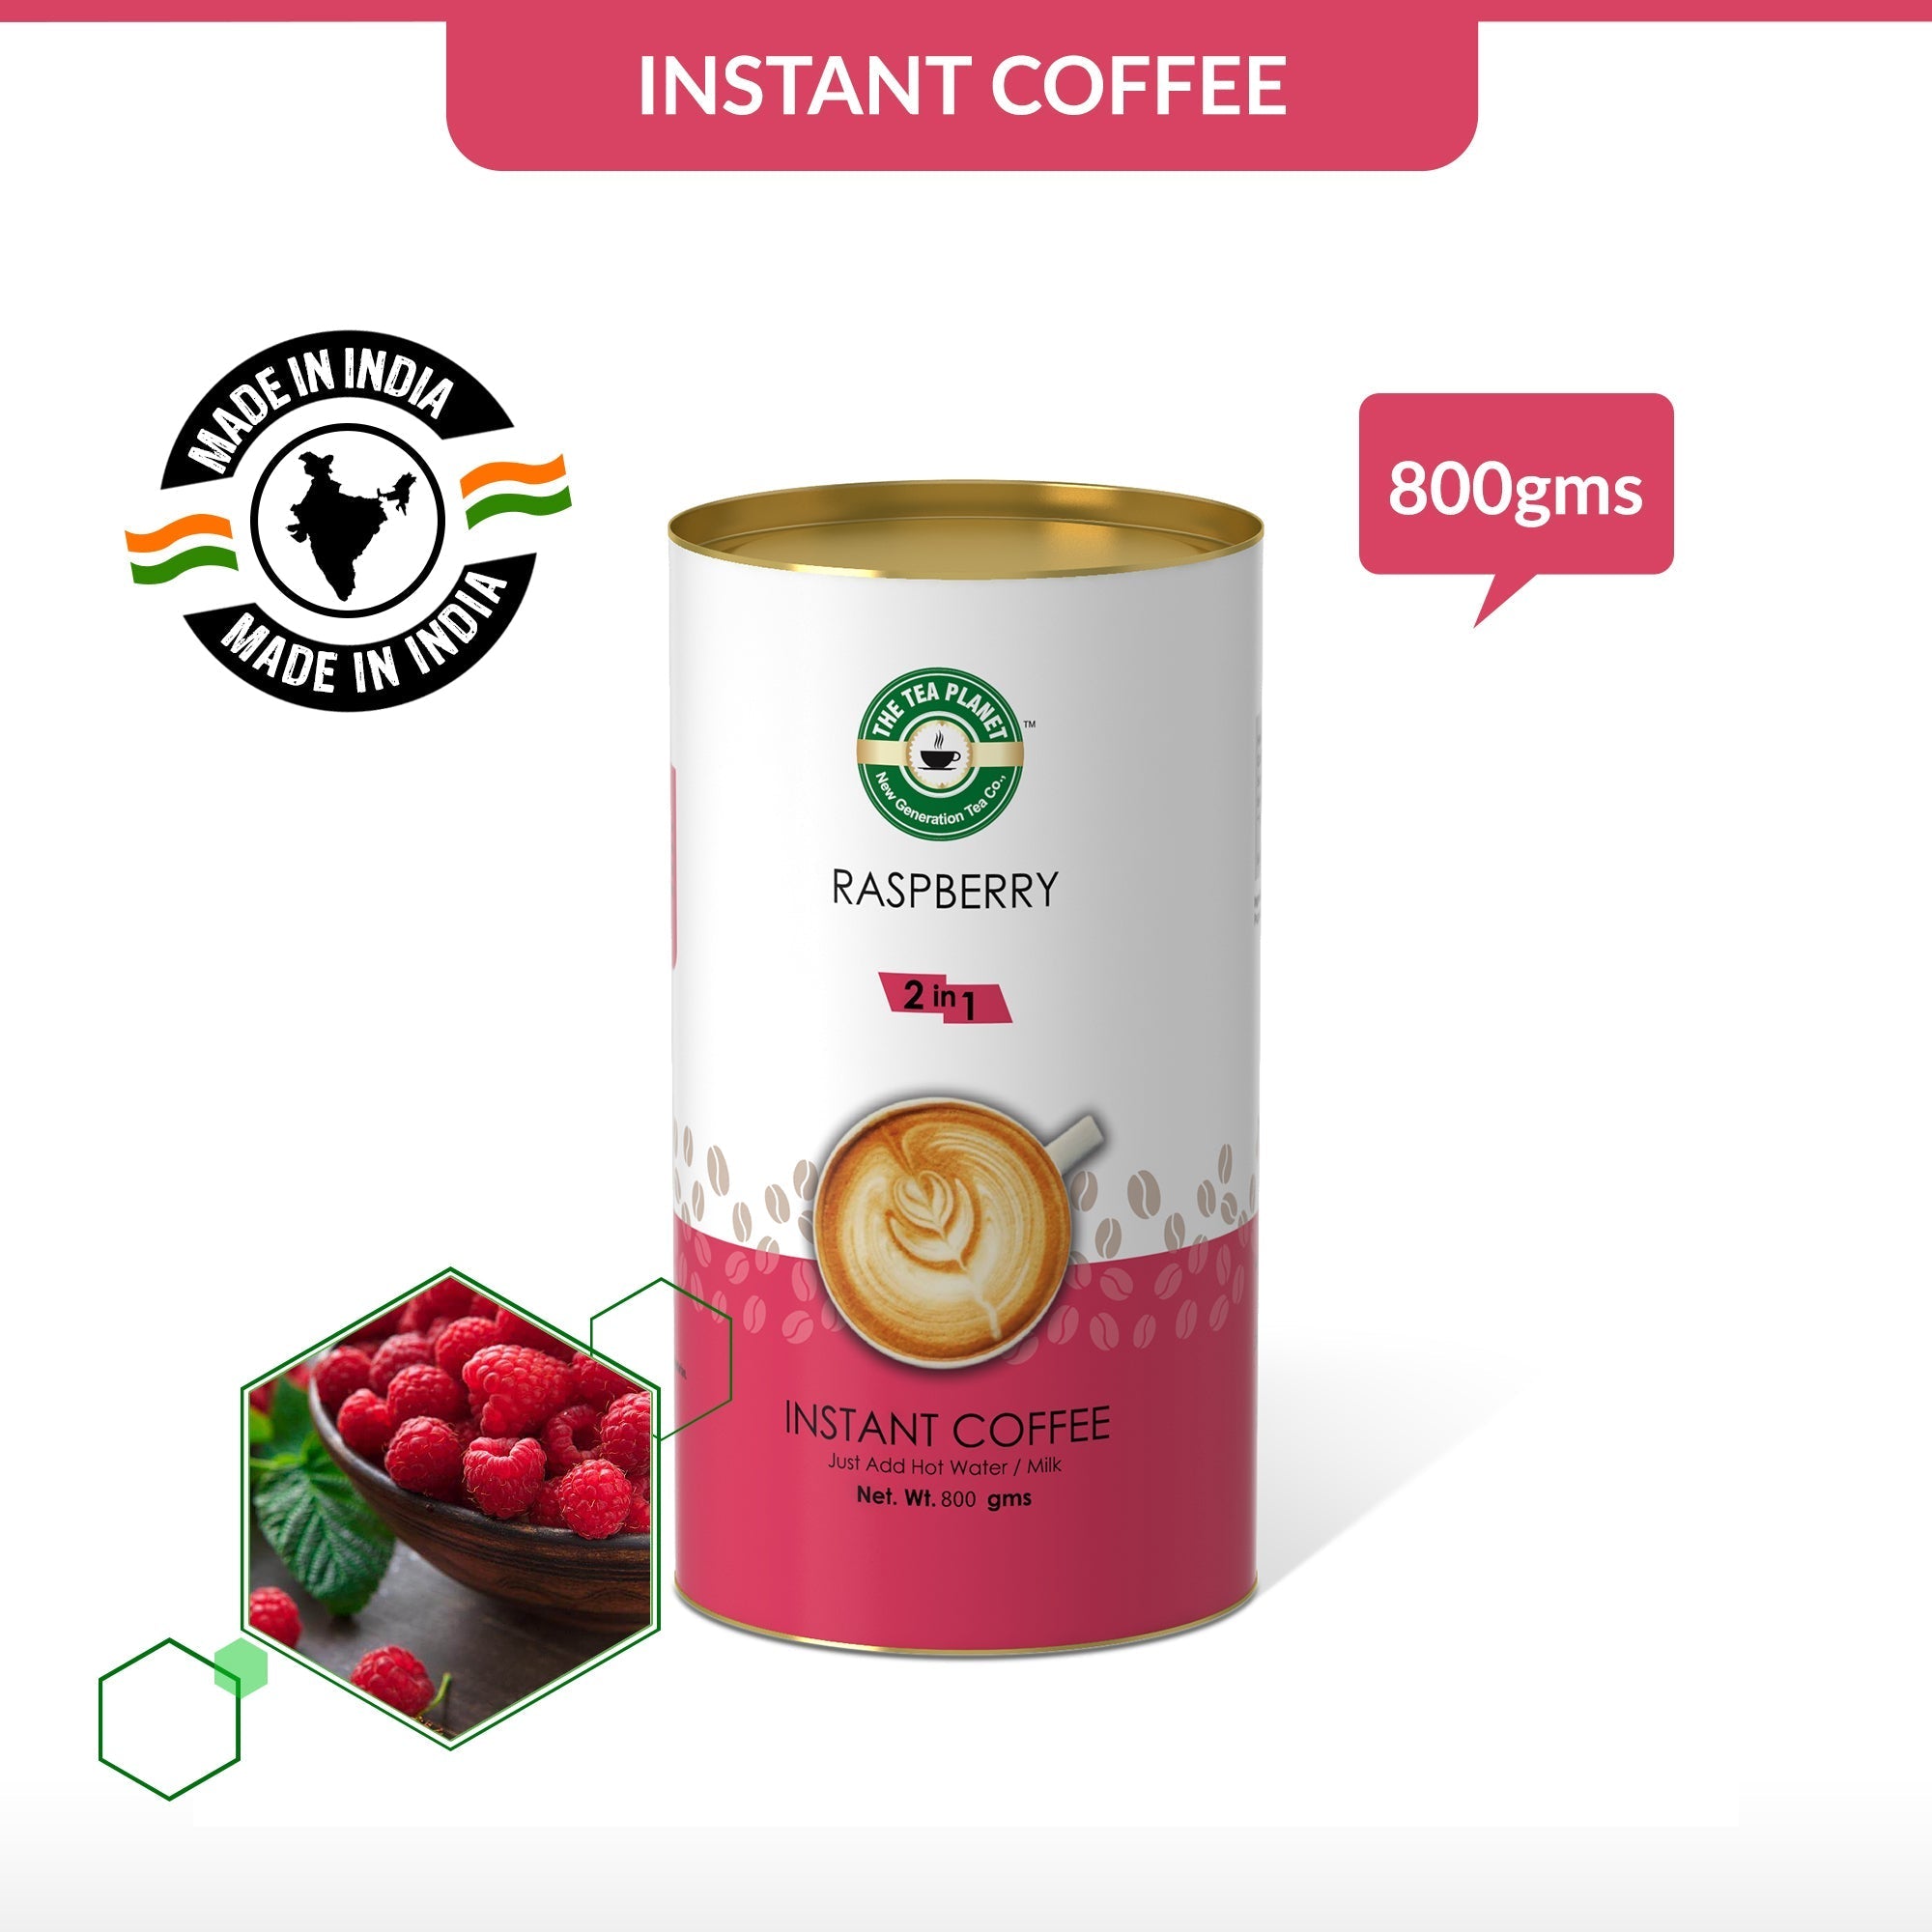 Raspberry Instant Coffee Premix (2 in 1) - 800 gms